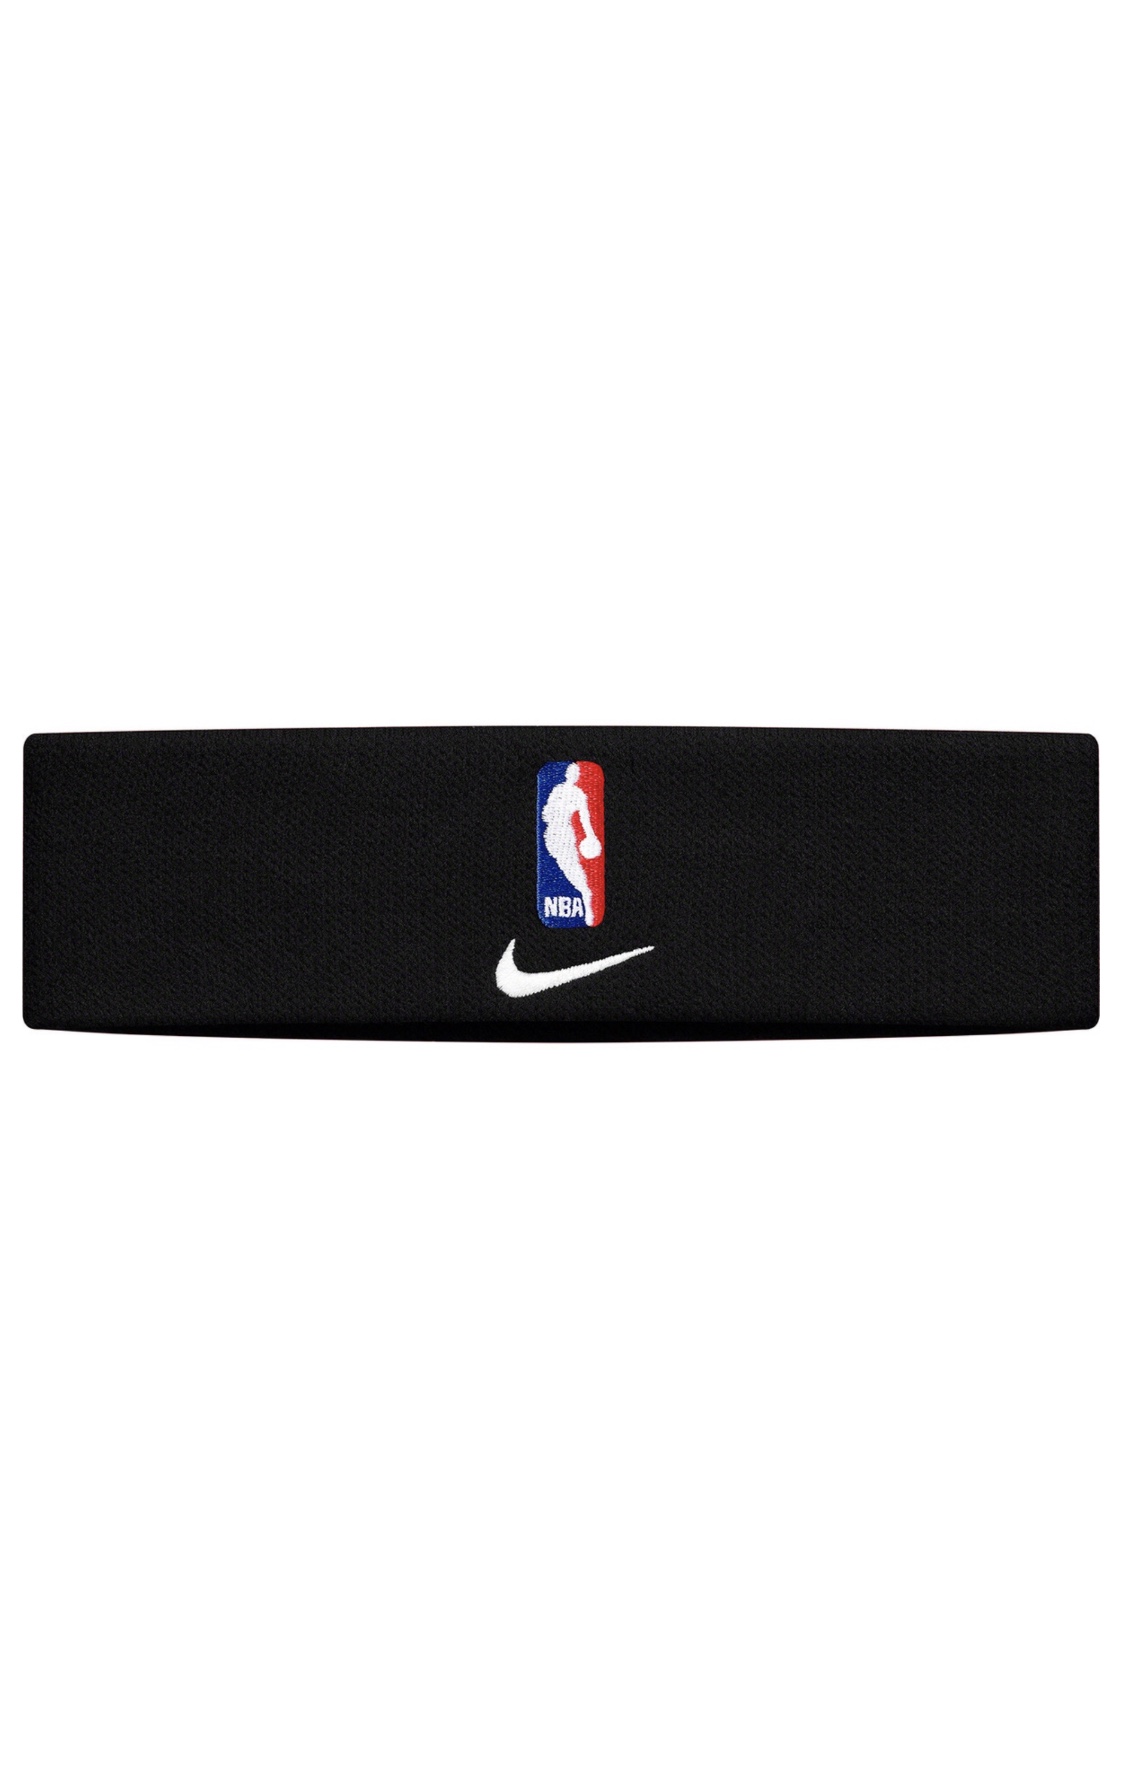 Supreme Nike nba headband black 5fgaOEBV6K - emily-judith.com